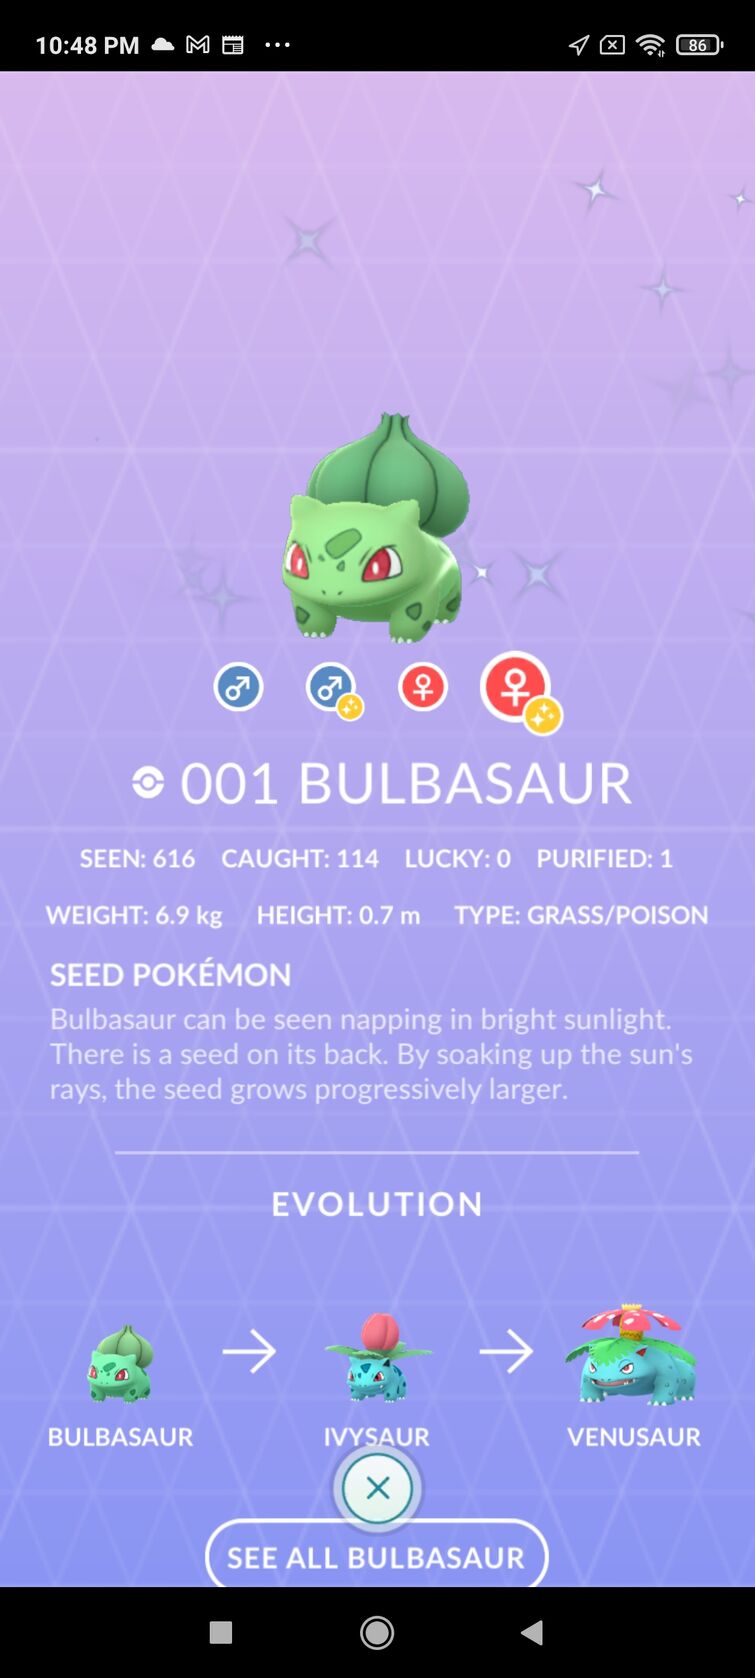 I finally caught a shiny Bulbasaur after 2300+ encounters, 11+